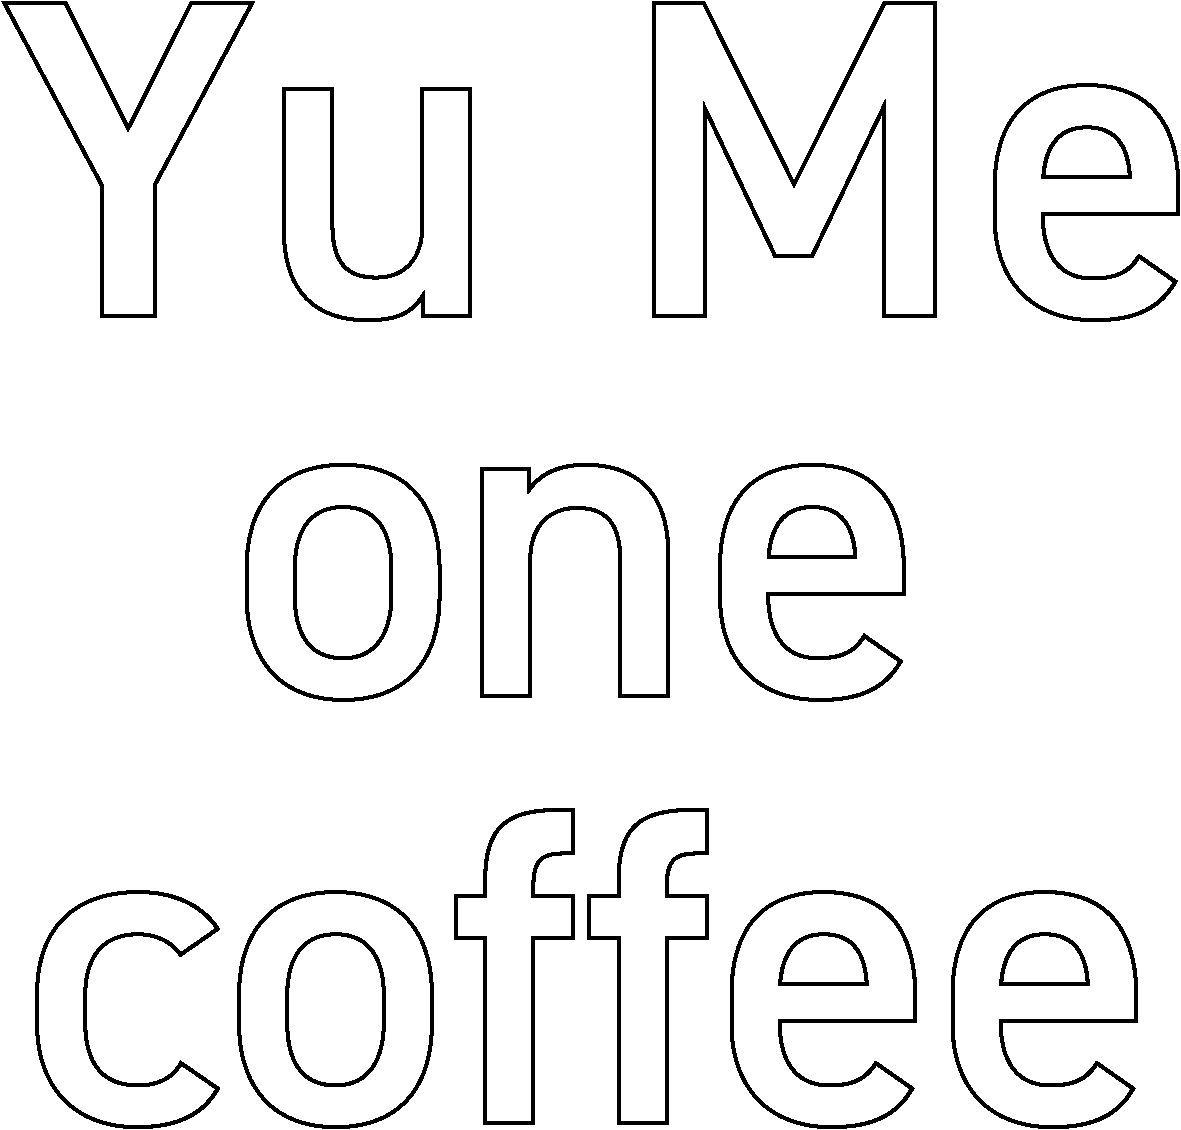 Yu Me one coffee